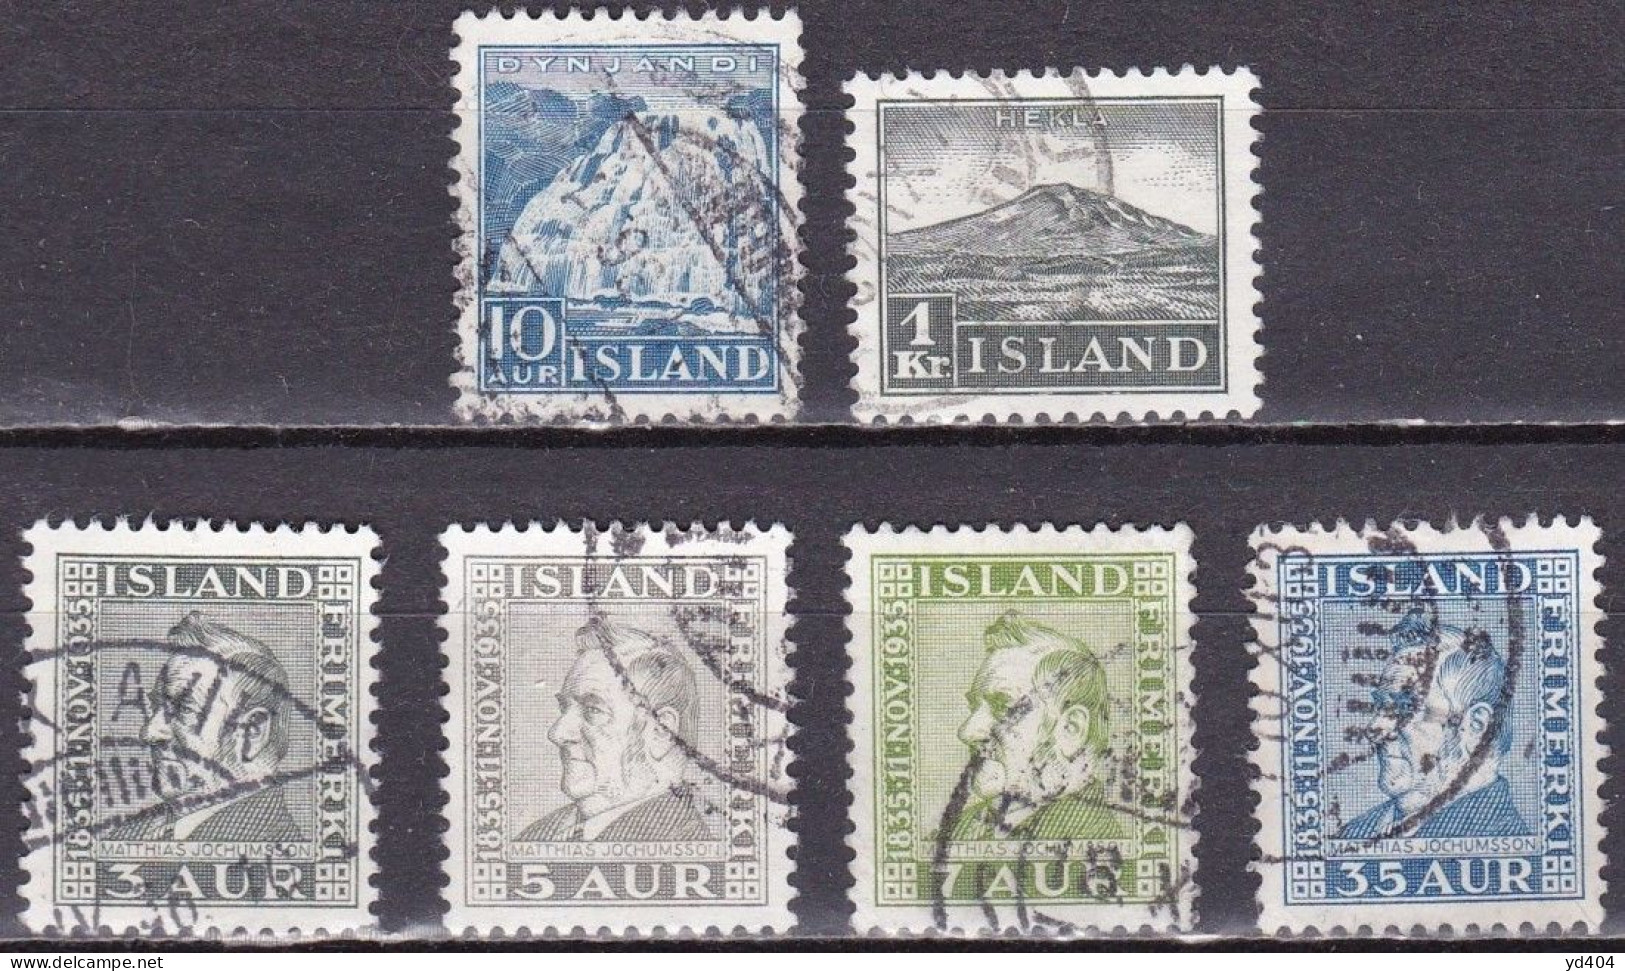 IS032 – ISLANDE – ICELAND – 1935 – FULL YEAR SET – SG # 214/9 USED 11 € - Oblitérés